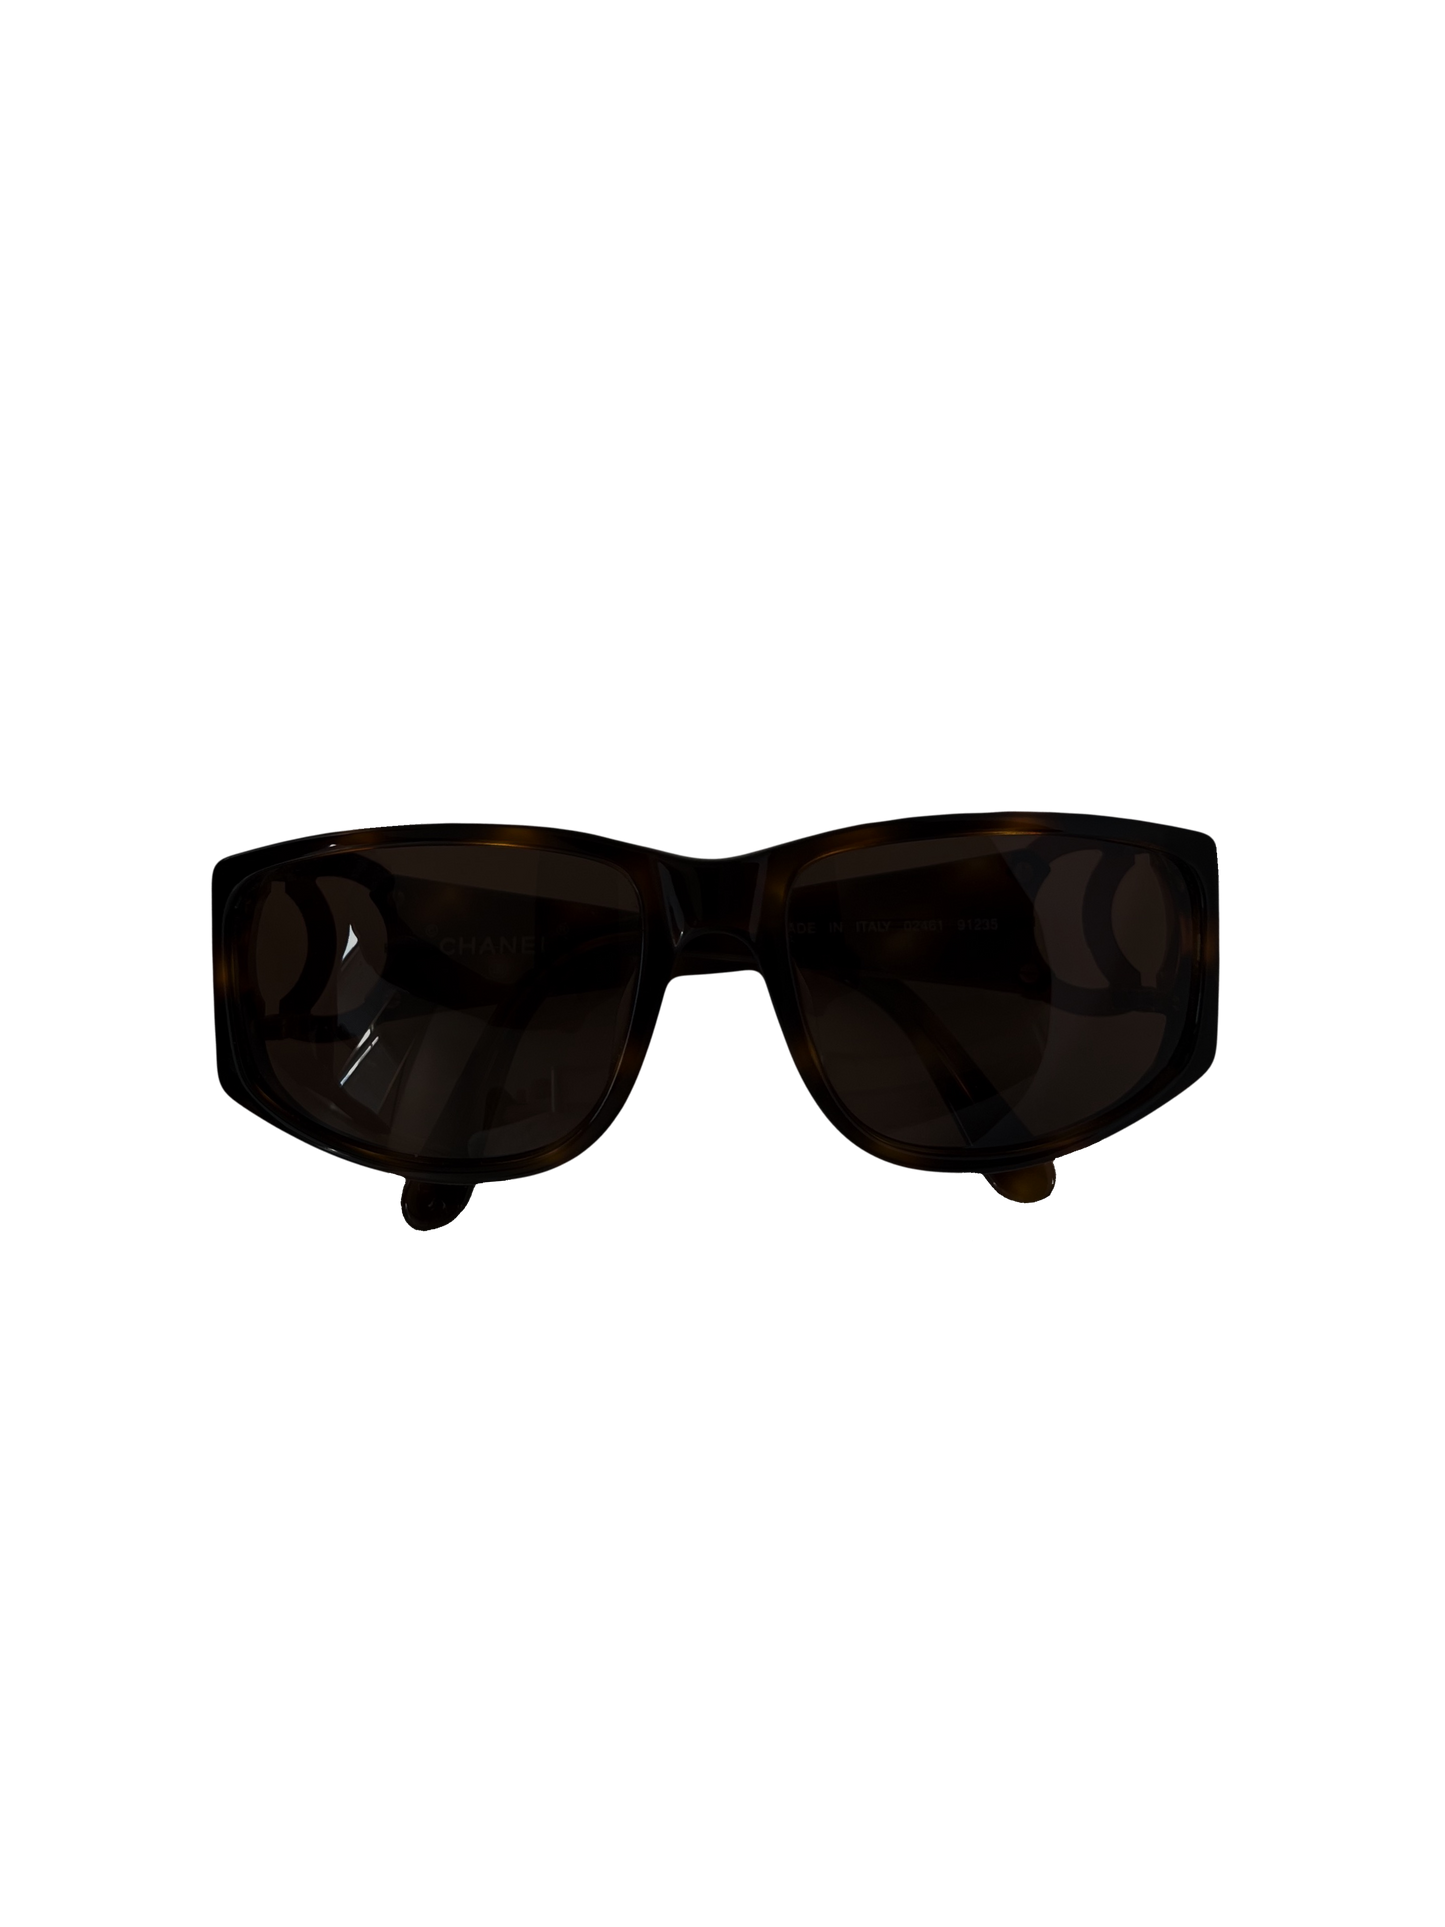 Chanel CC Logo Sunglasses